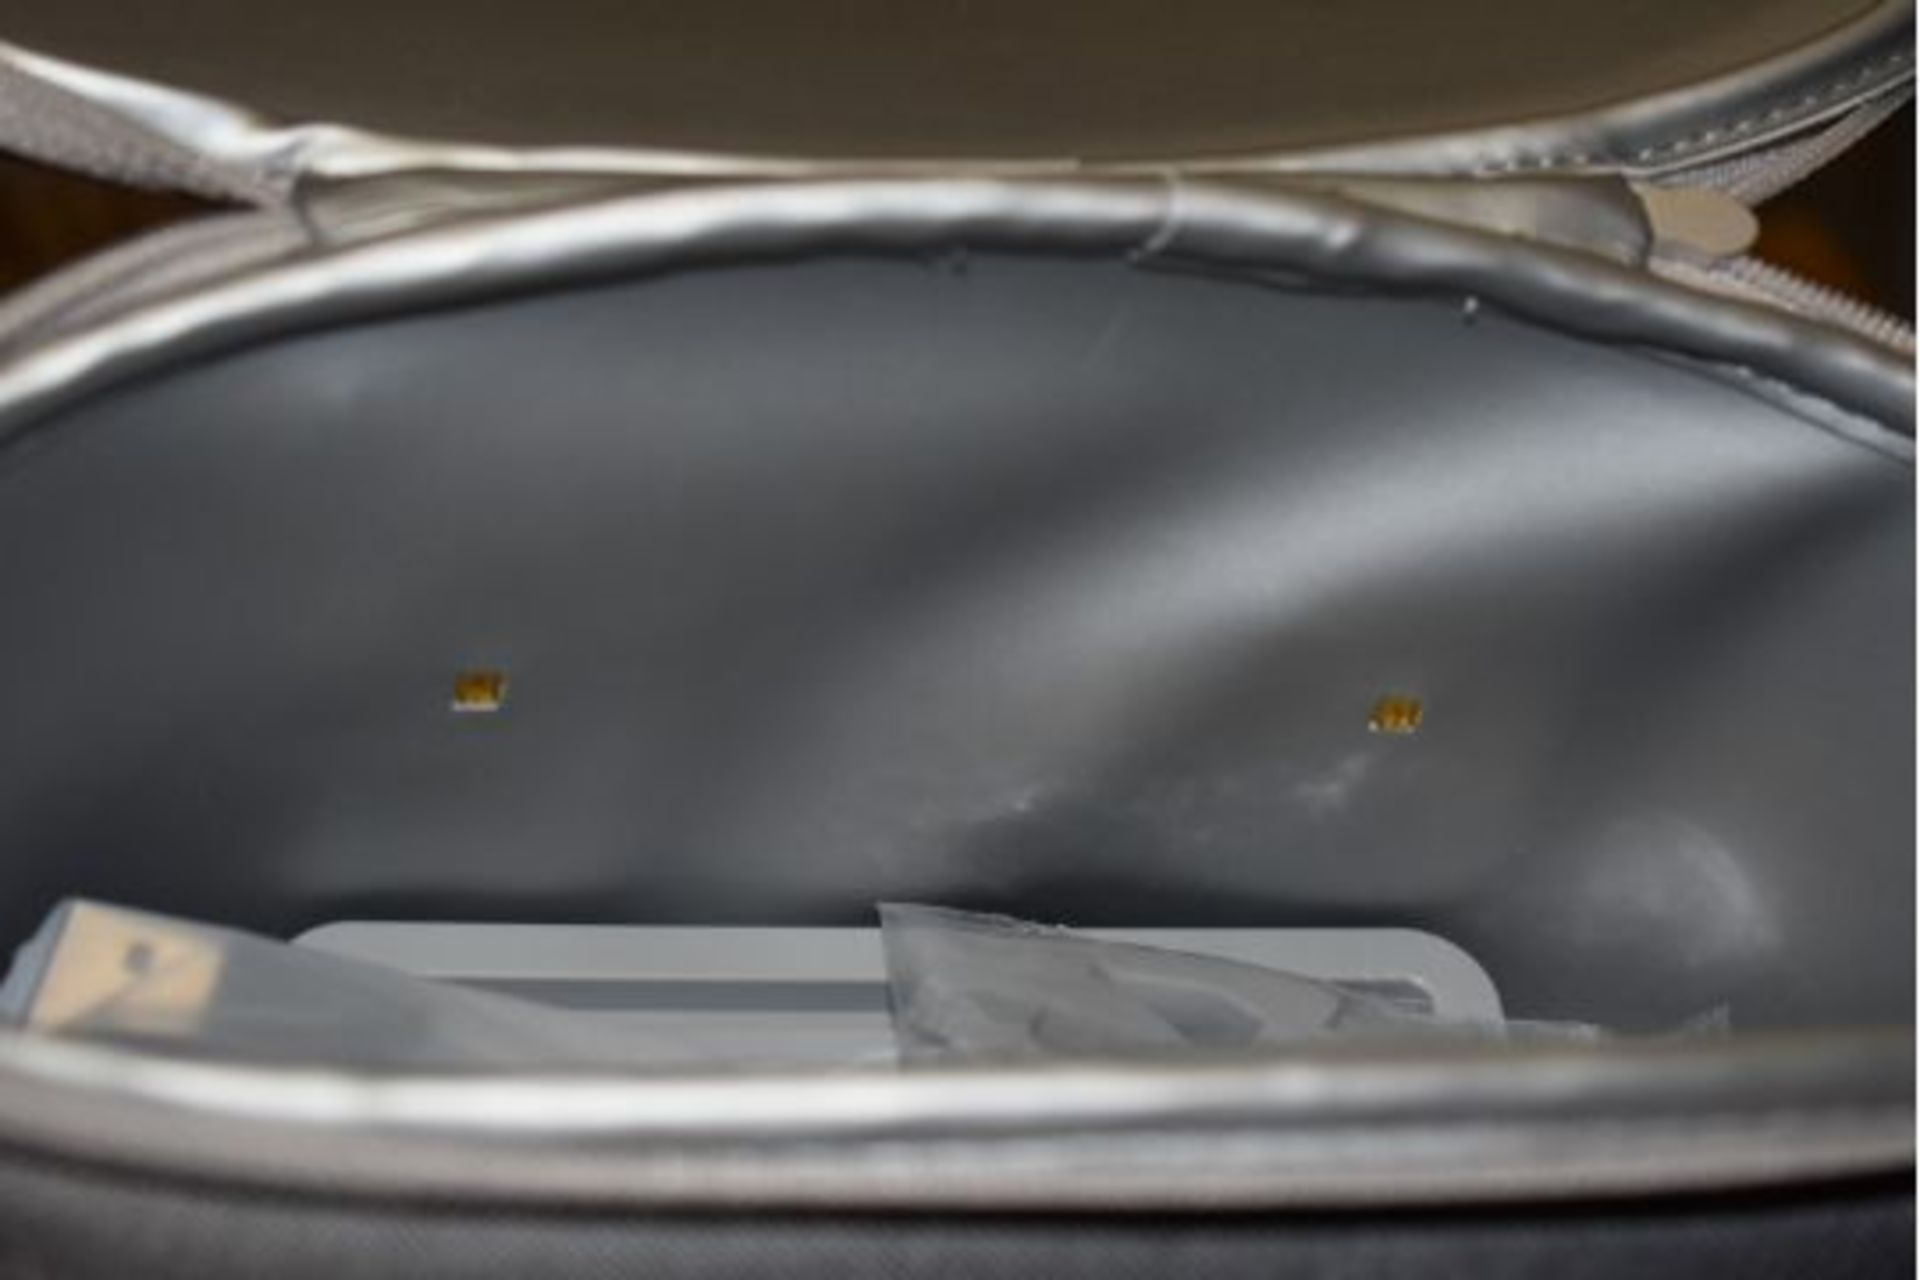 1 x Homedics UV Clean Portable Sanitiser Bag - Kills Upto 99.9% of Bacteria & Viruses in Just 60 - Image 22 of 24